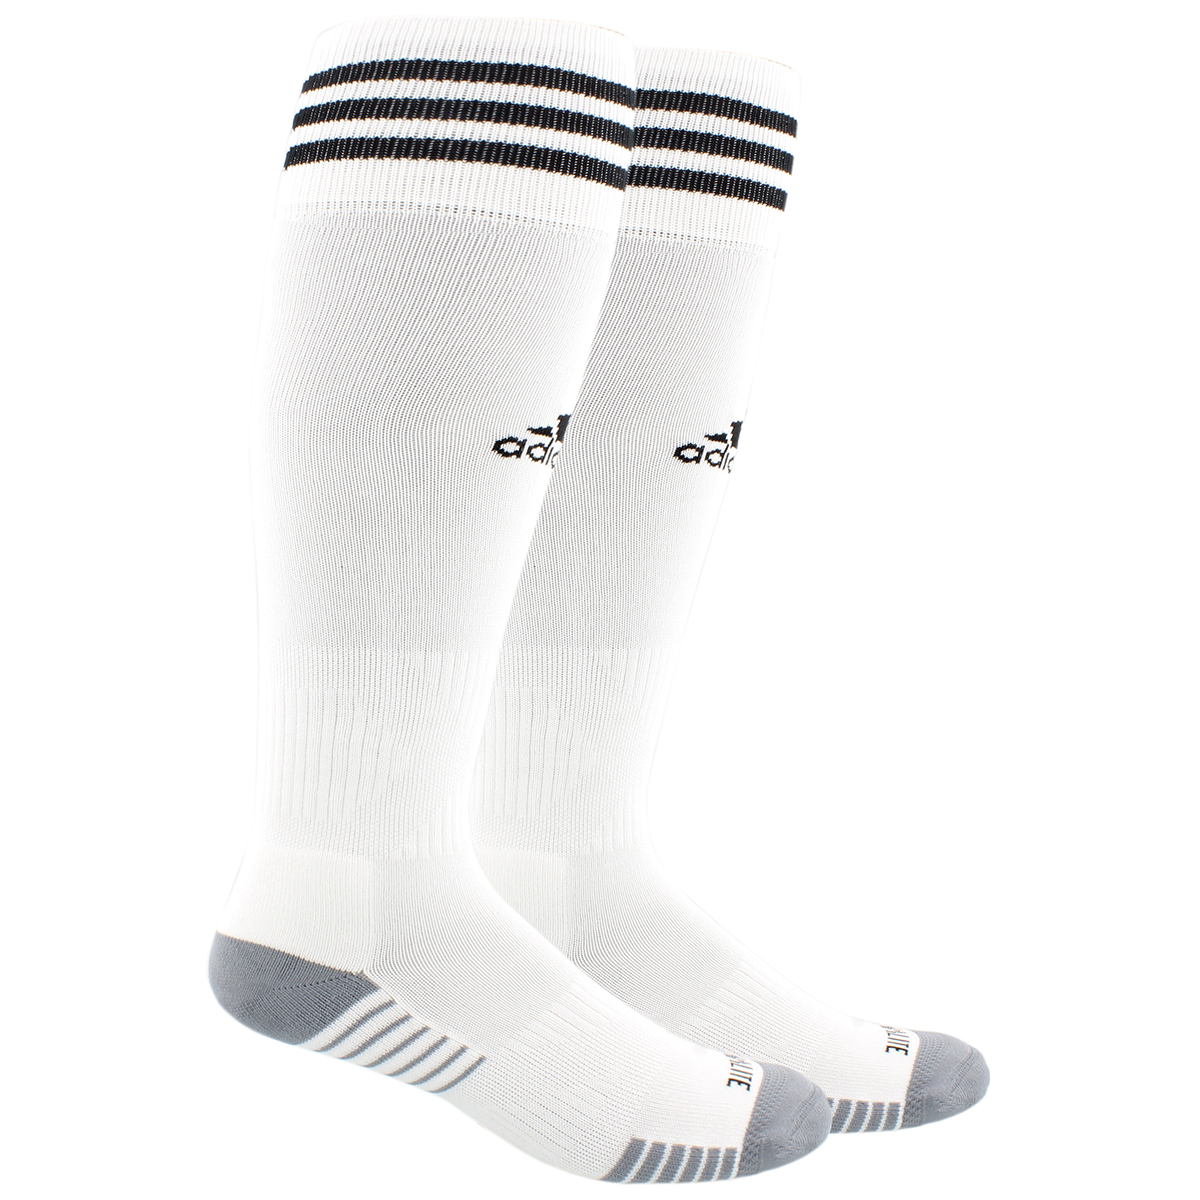 Adidas Men's Copa Zone Cushion 4 Socks